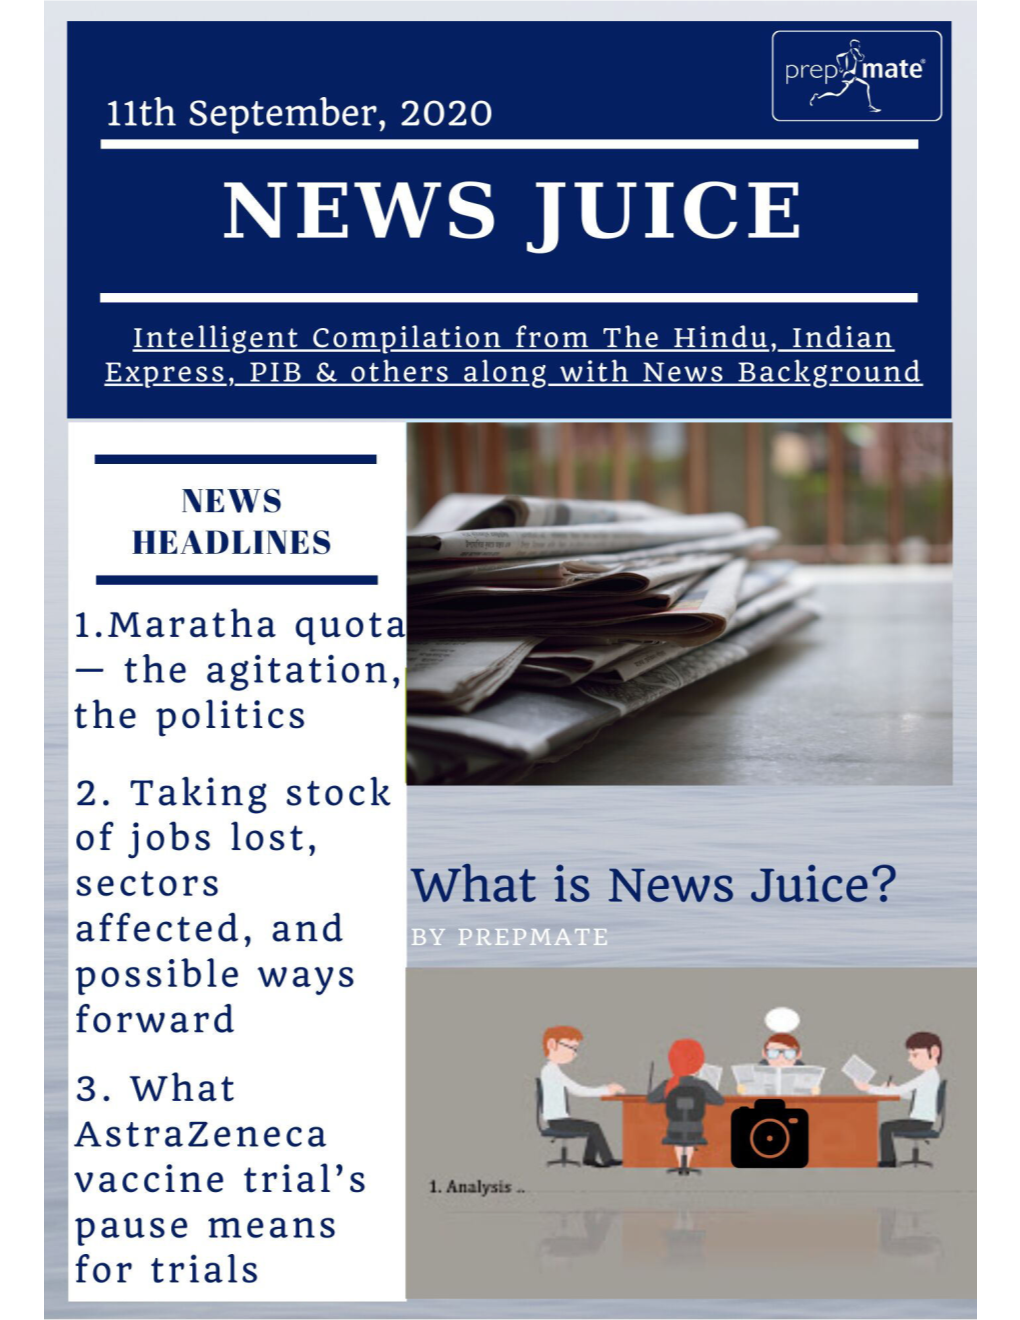 News-Juice-11Th-September-2020